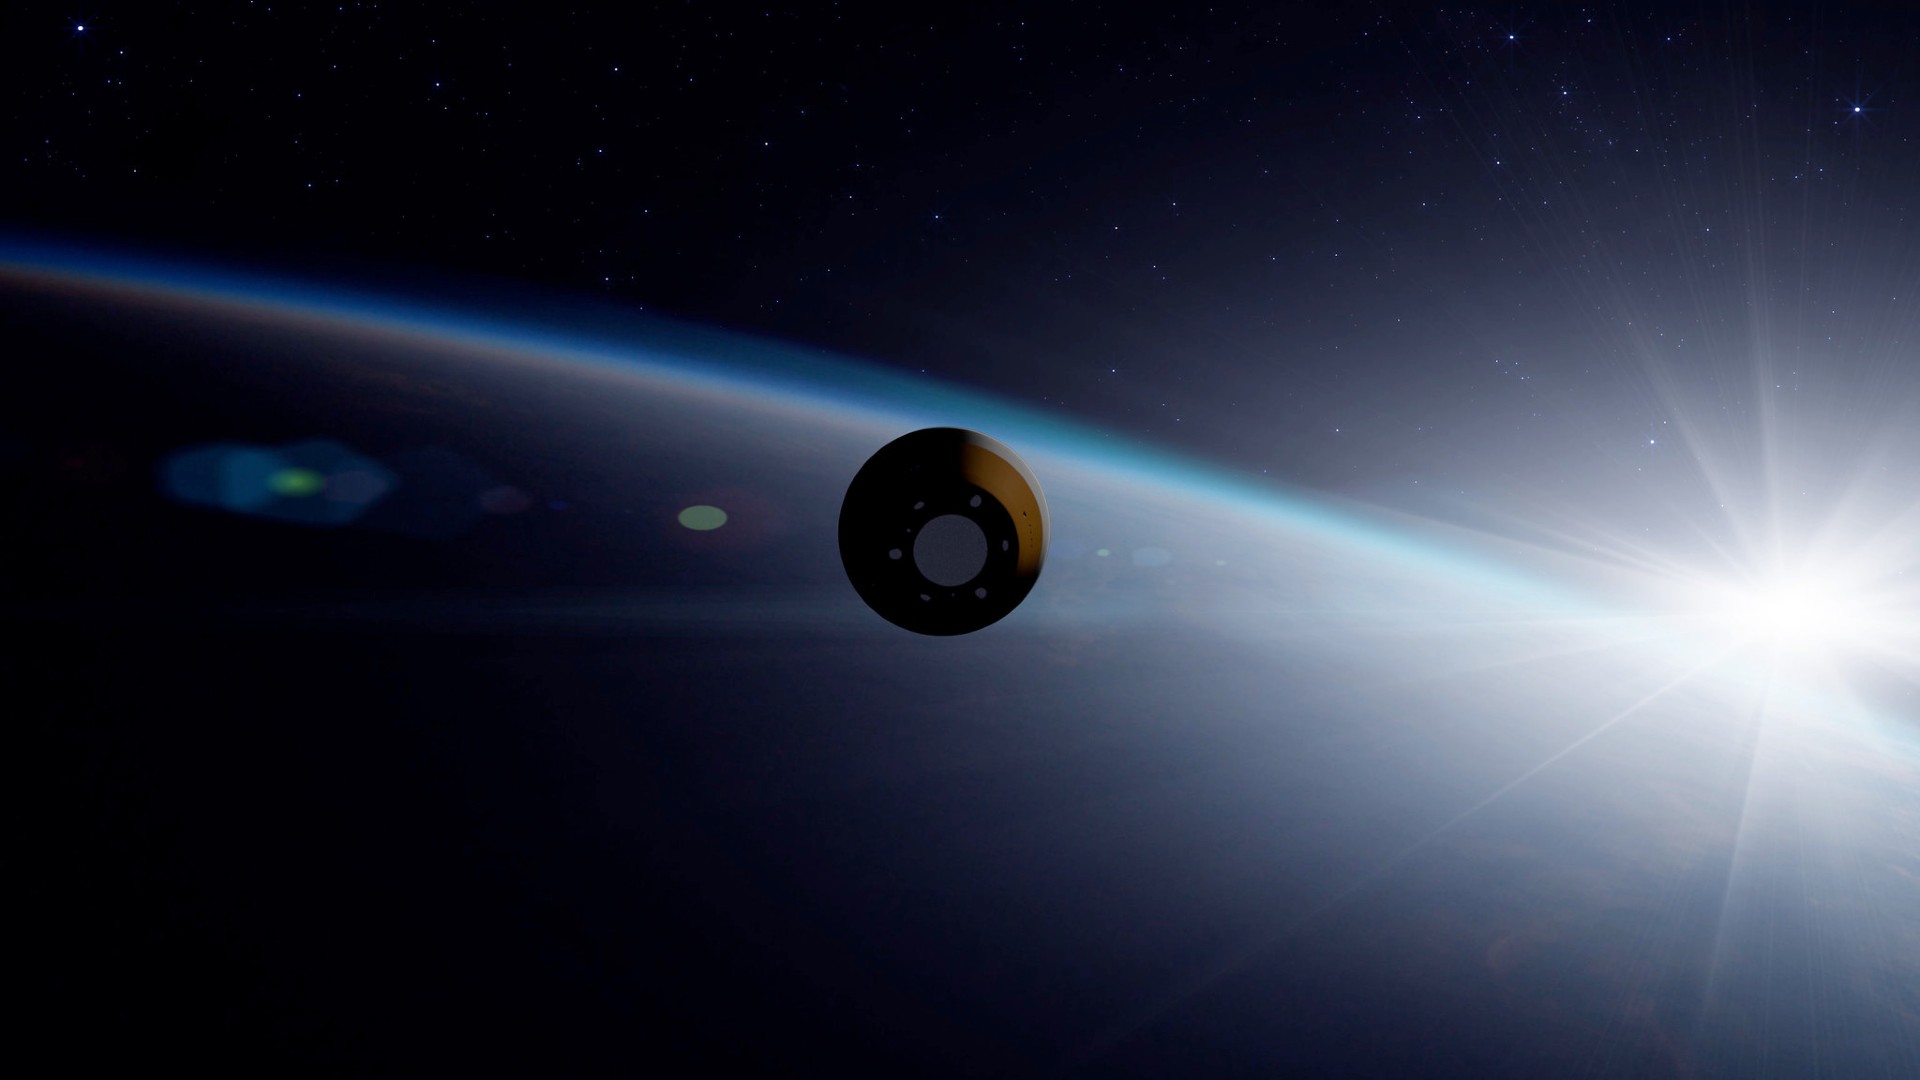  NASA's OSIRIS-REx spacecraft releases asteroid sample capsule toward Earth in flyby, heads to Apophis 